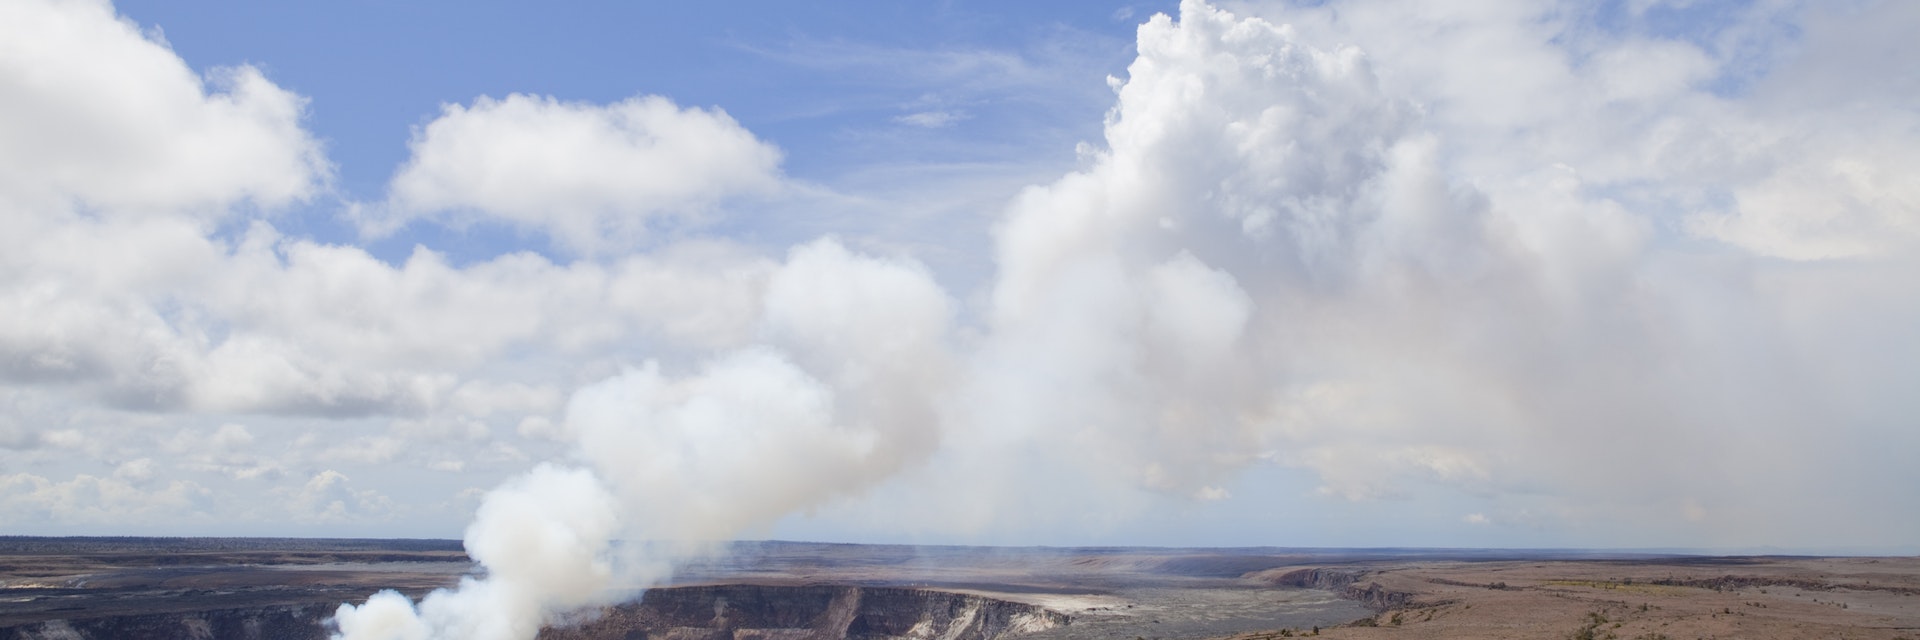 Kilauea crater fumarole expelling fumes.
467882084
Cloudscape, Pele, Kilauea, Geology, Fumes, Exploding, Wide Angle, Big Island, Hawaii Islands, Day, Island, Volcanic Crater, Fumarole, Volcano, Earth, Cloud, Fog, hot spot, sulfide, Gas, Crater, Halemaʻumaʻu